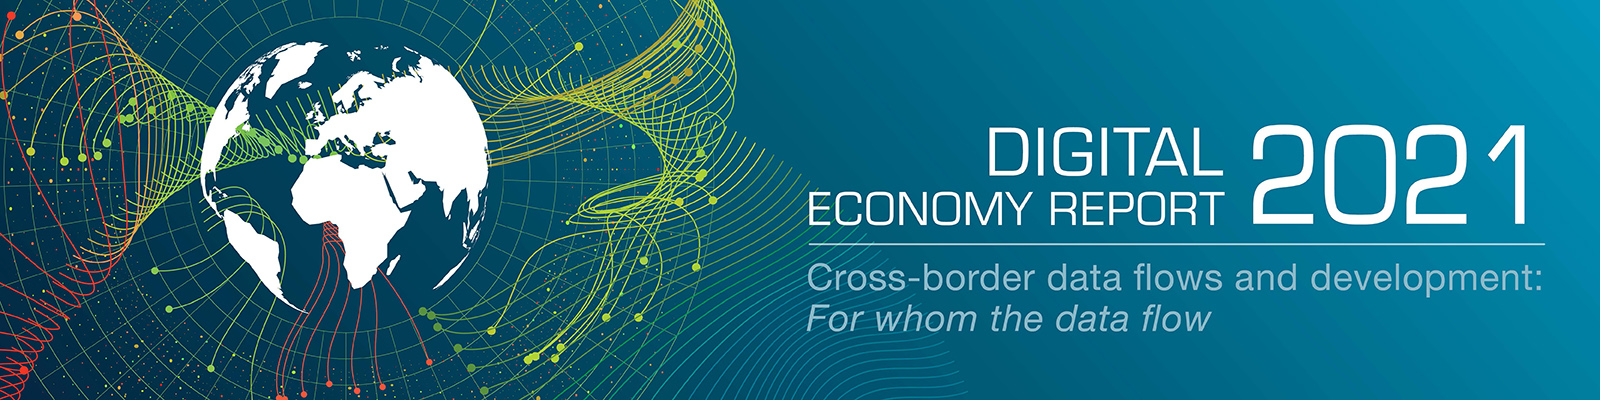 Digital Economy Report 2021 - banner